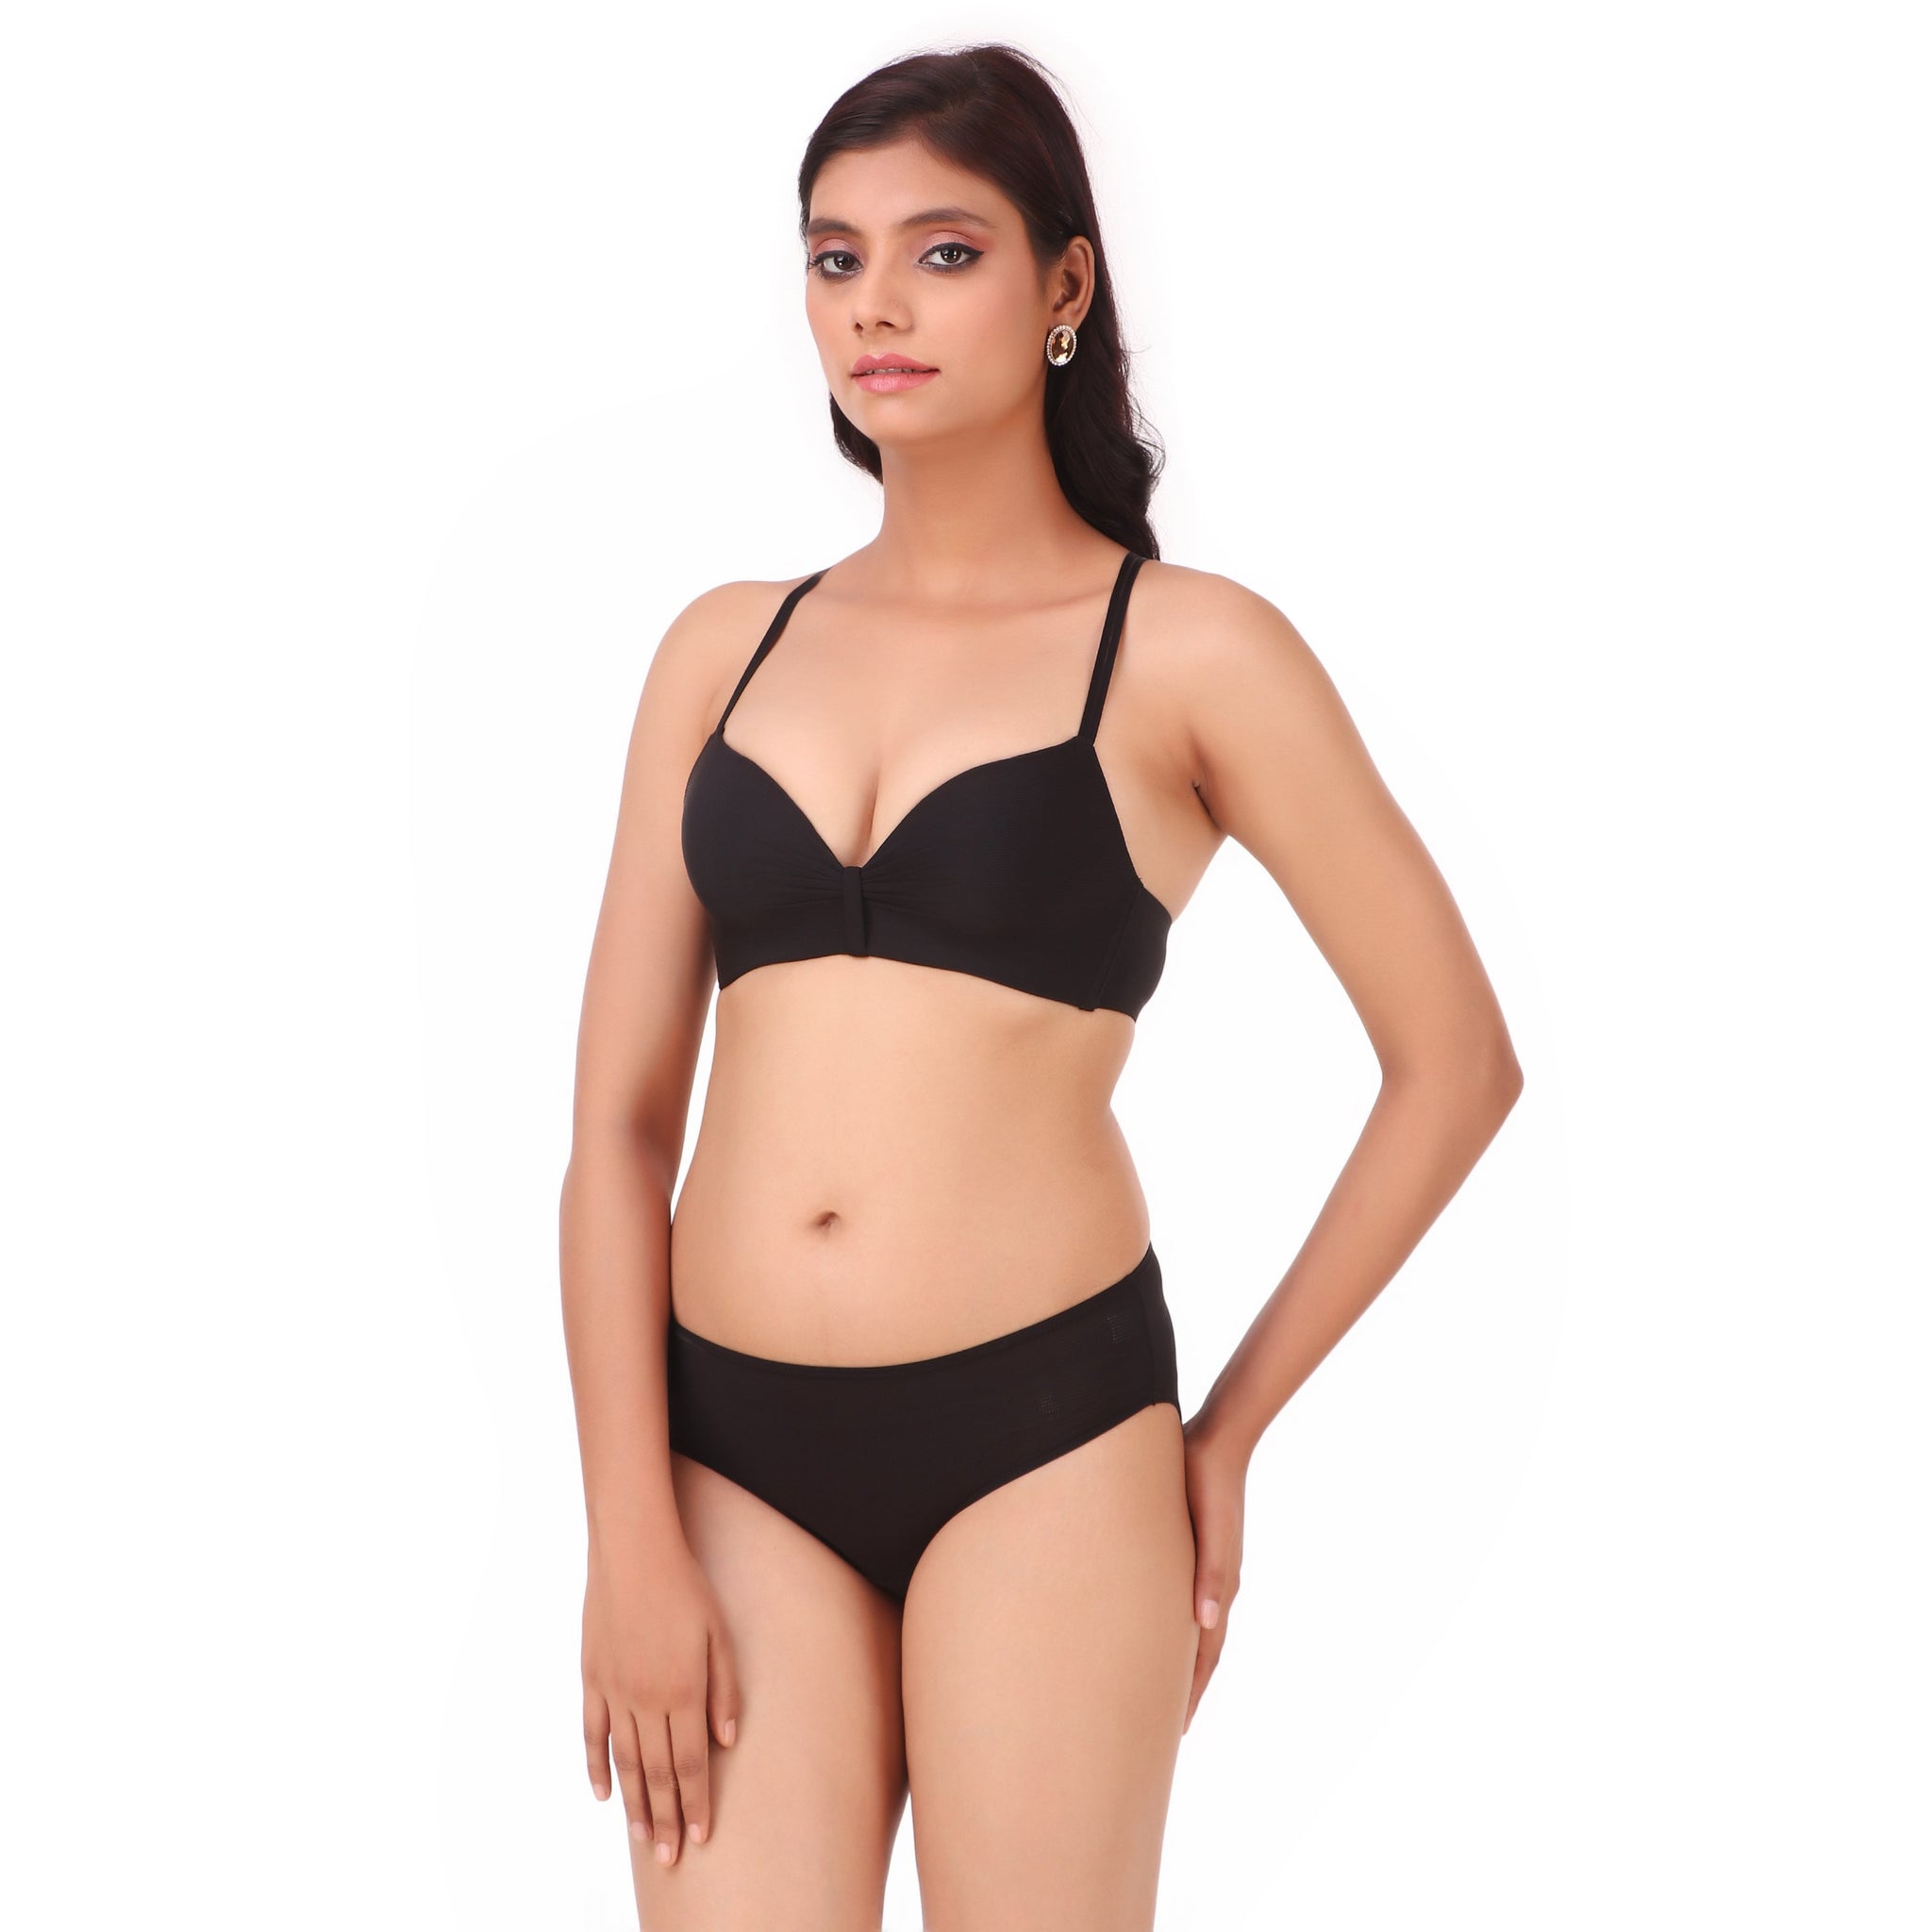 Buy Bra Panty Sets Online India  Buy Lingerie Sets for Women Online -  Savvyy